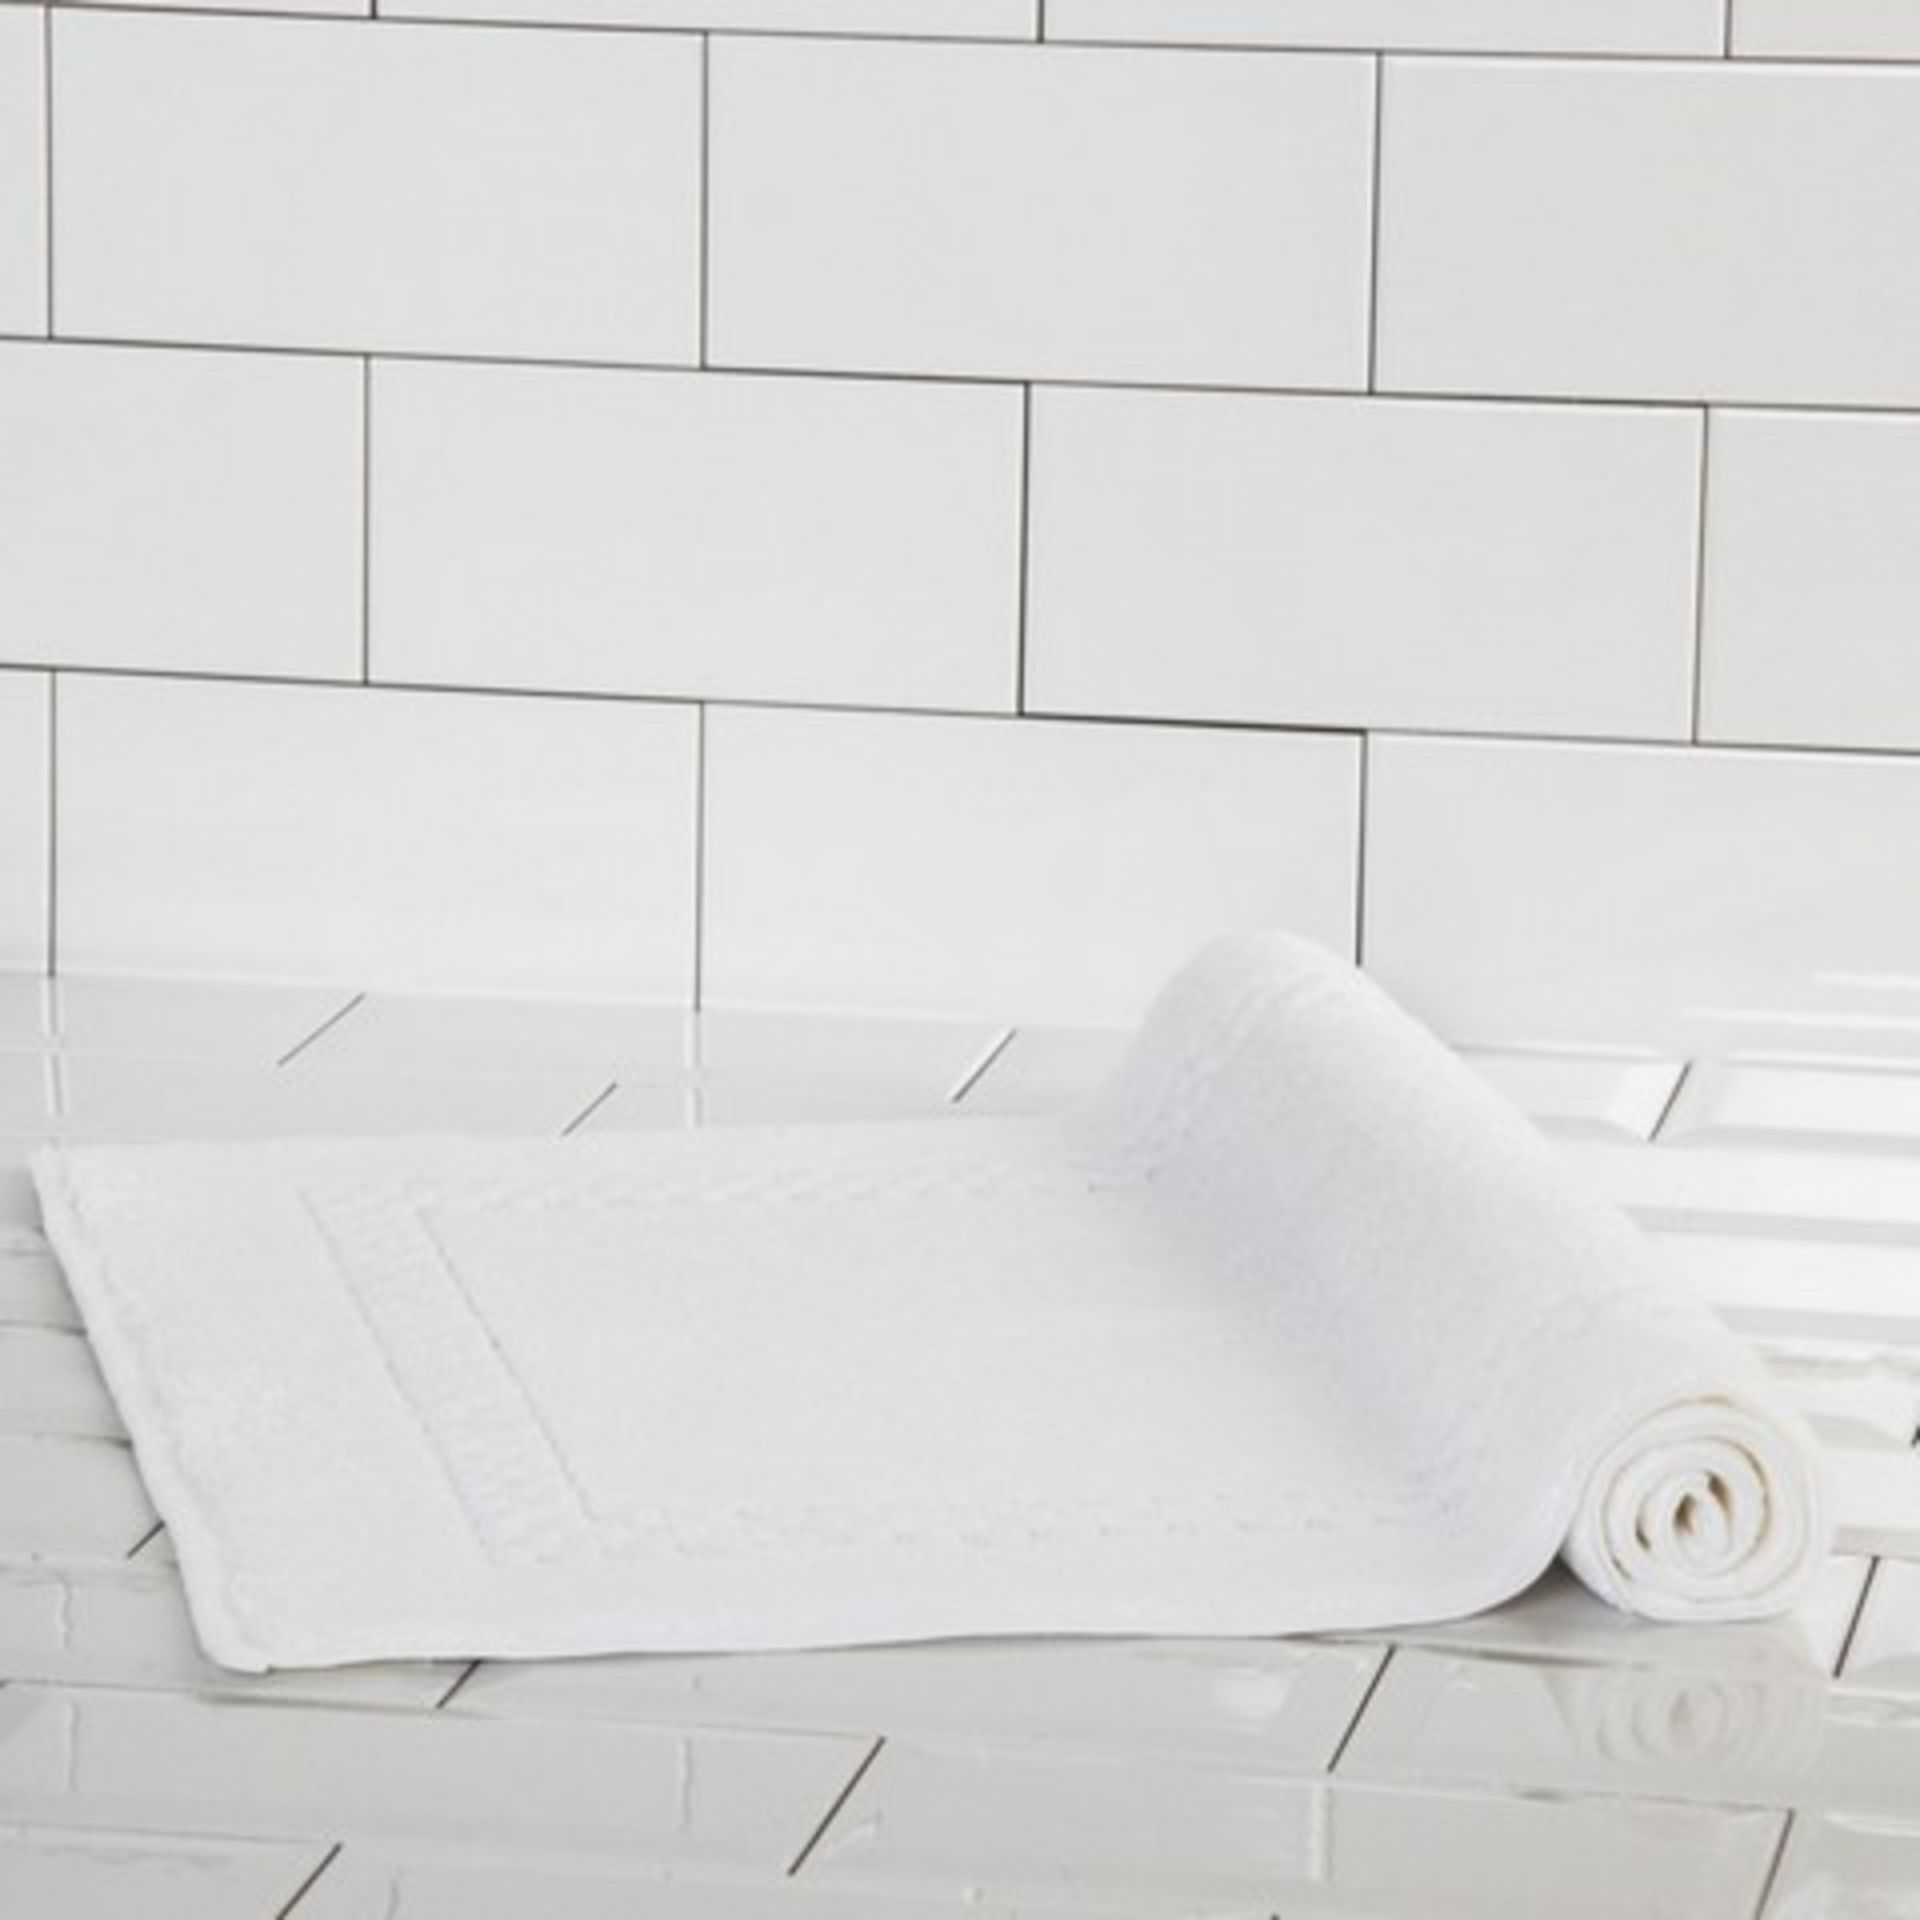 V Brand New Frette Luxury Italian Made White Bath Mat 100% Open Ended High Quality Cotton - 75cm x